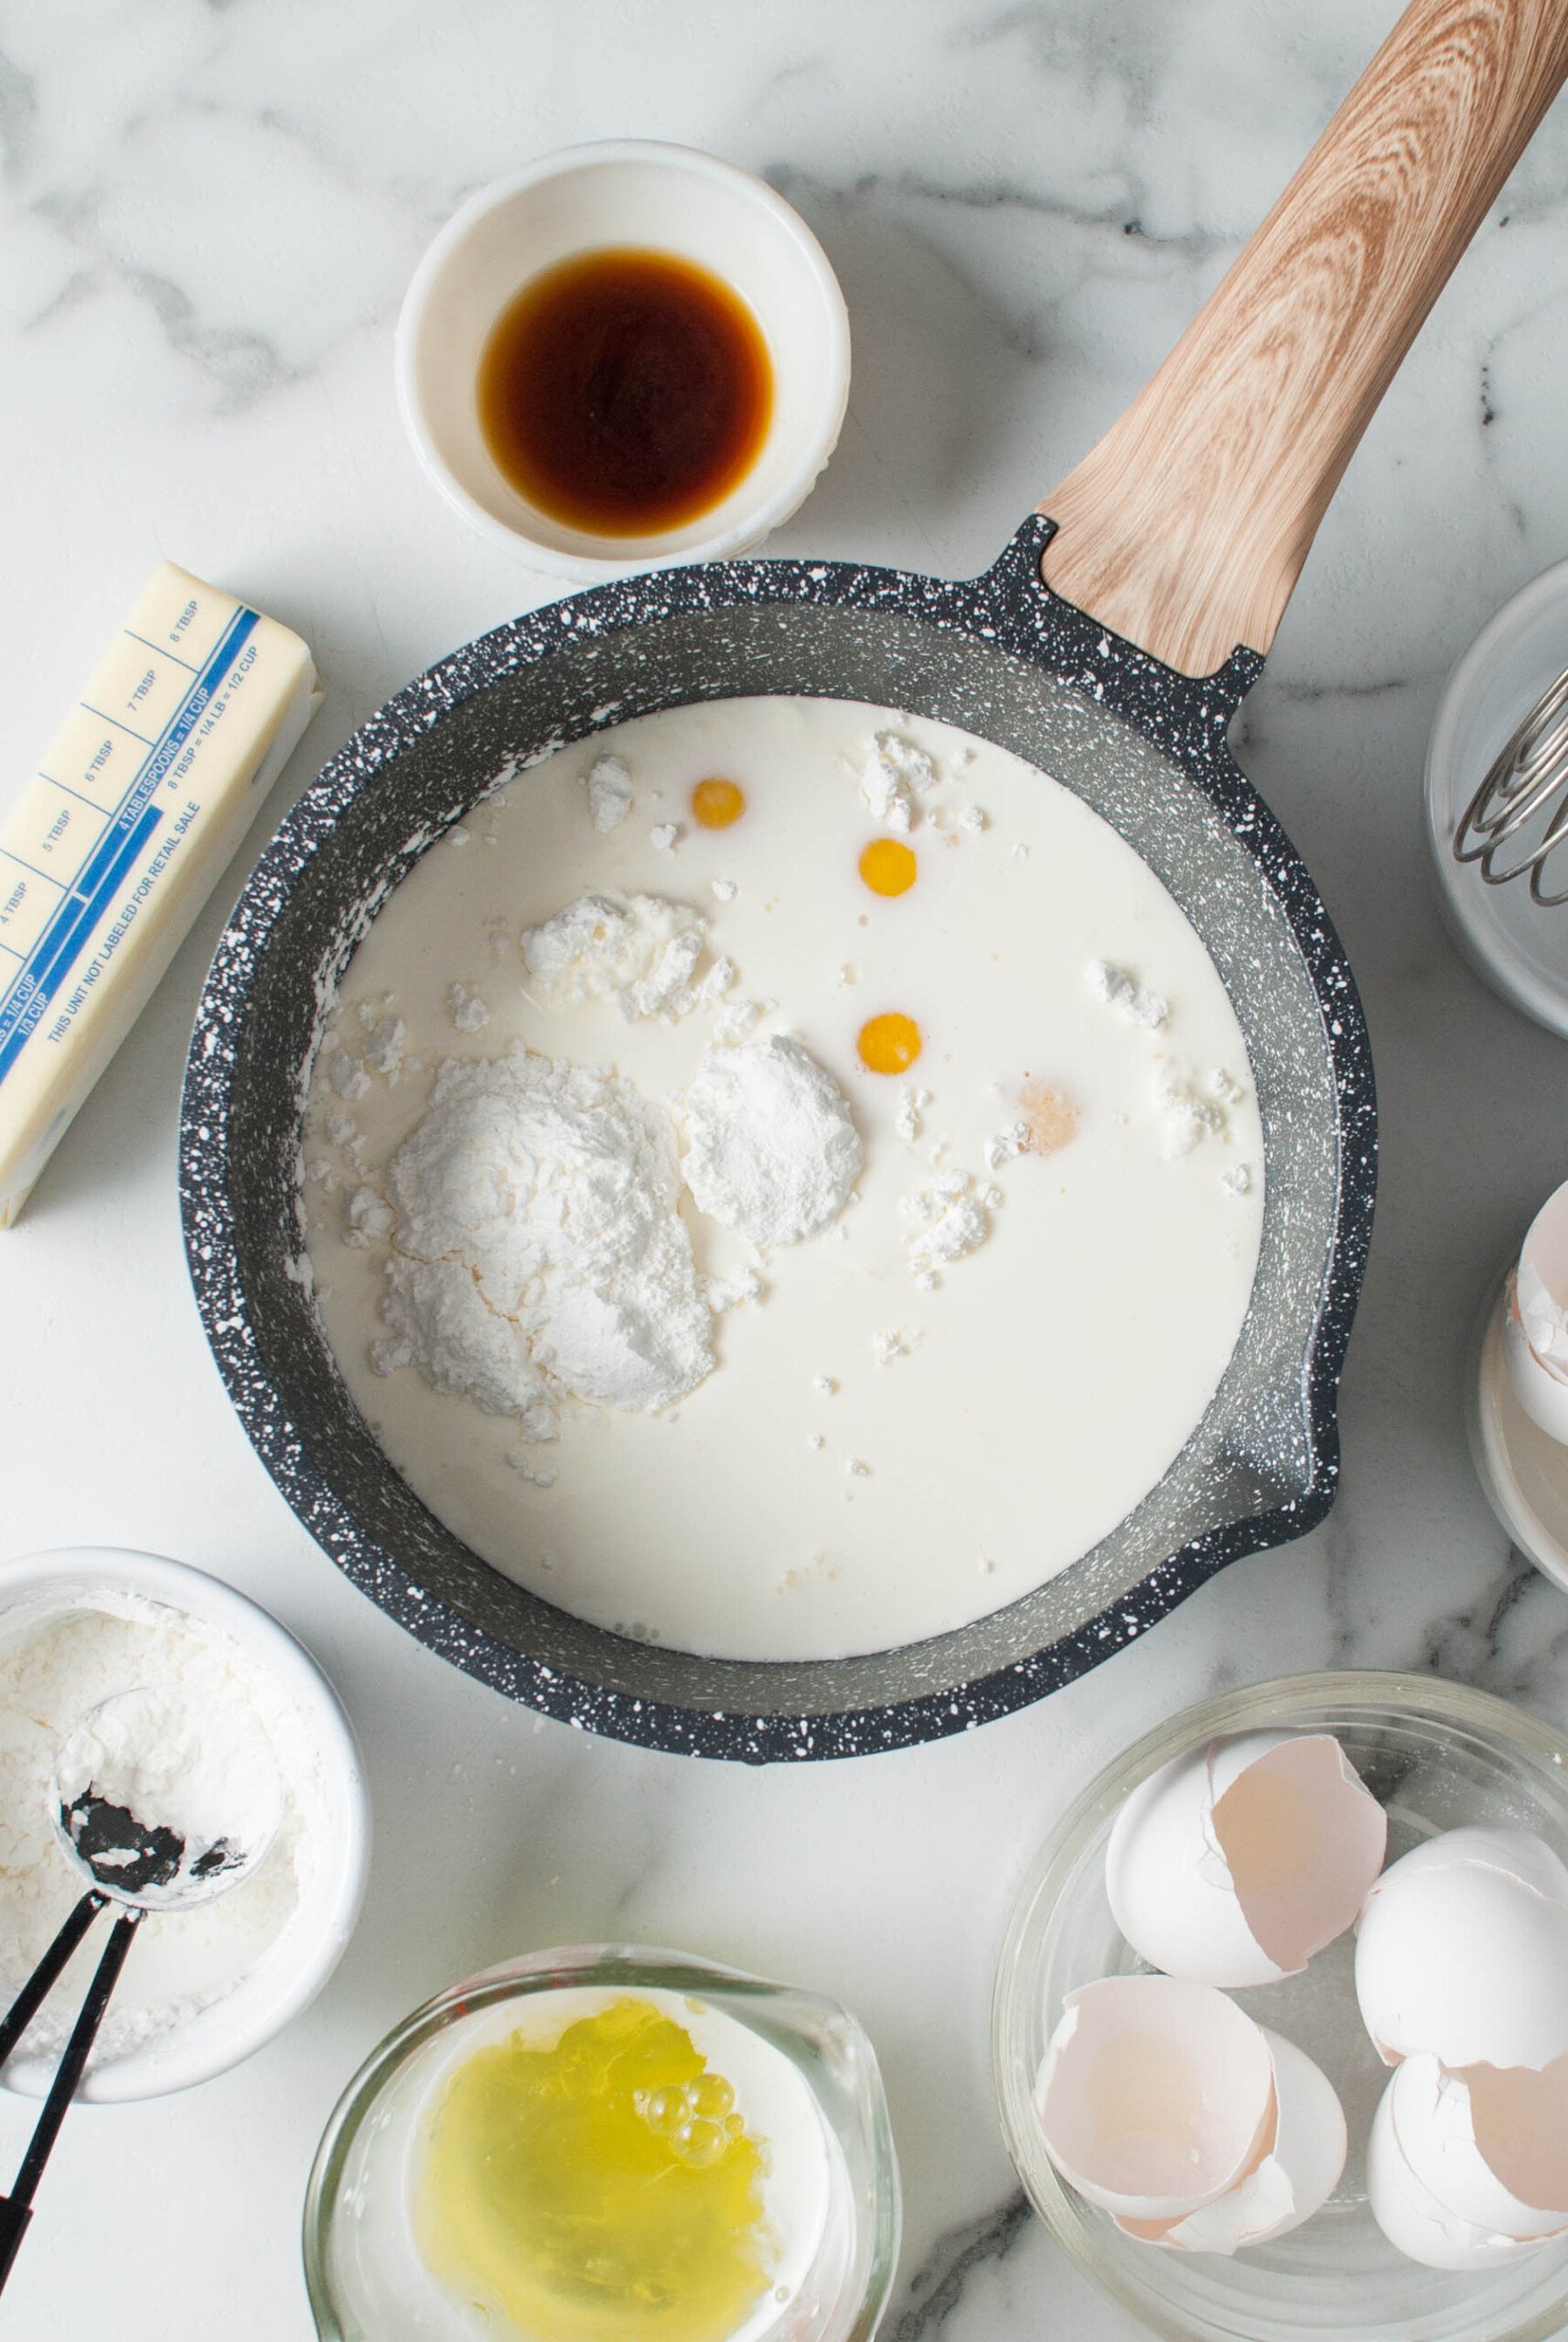 Combining milk, cornstarch, and egg yolks in a saucepan.